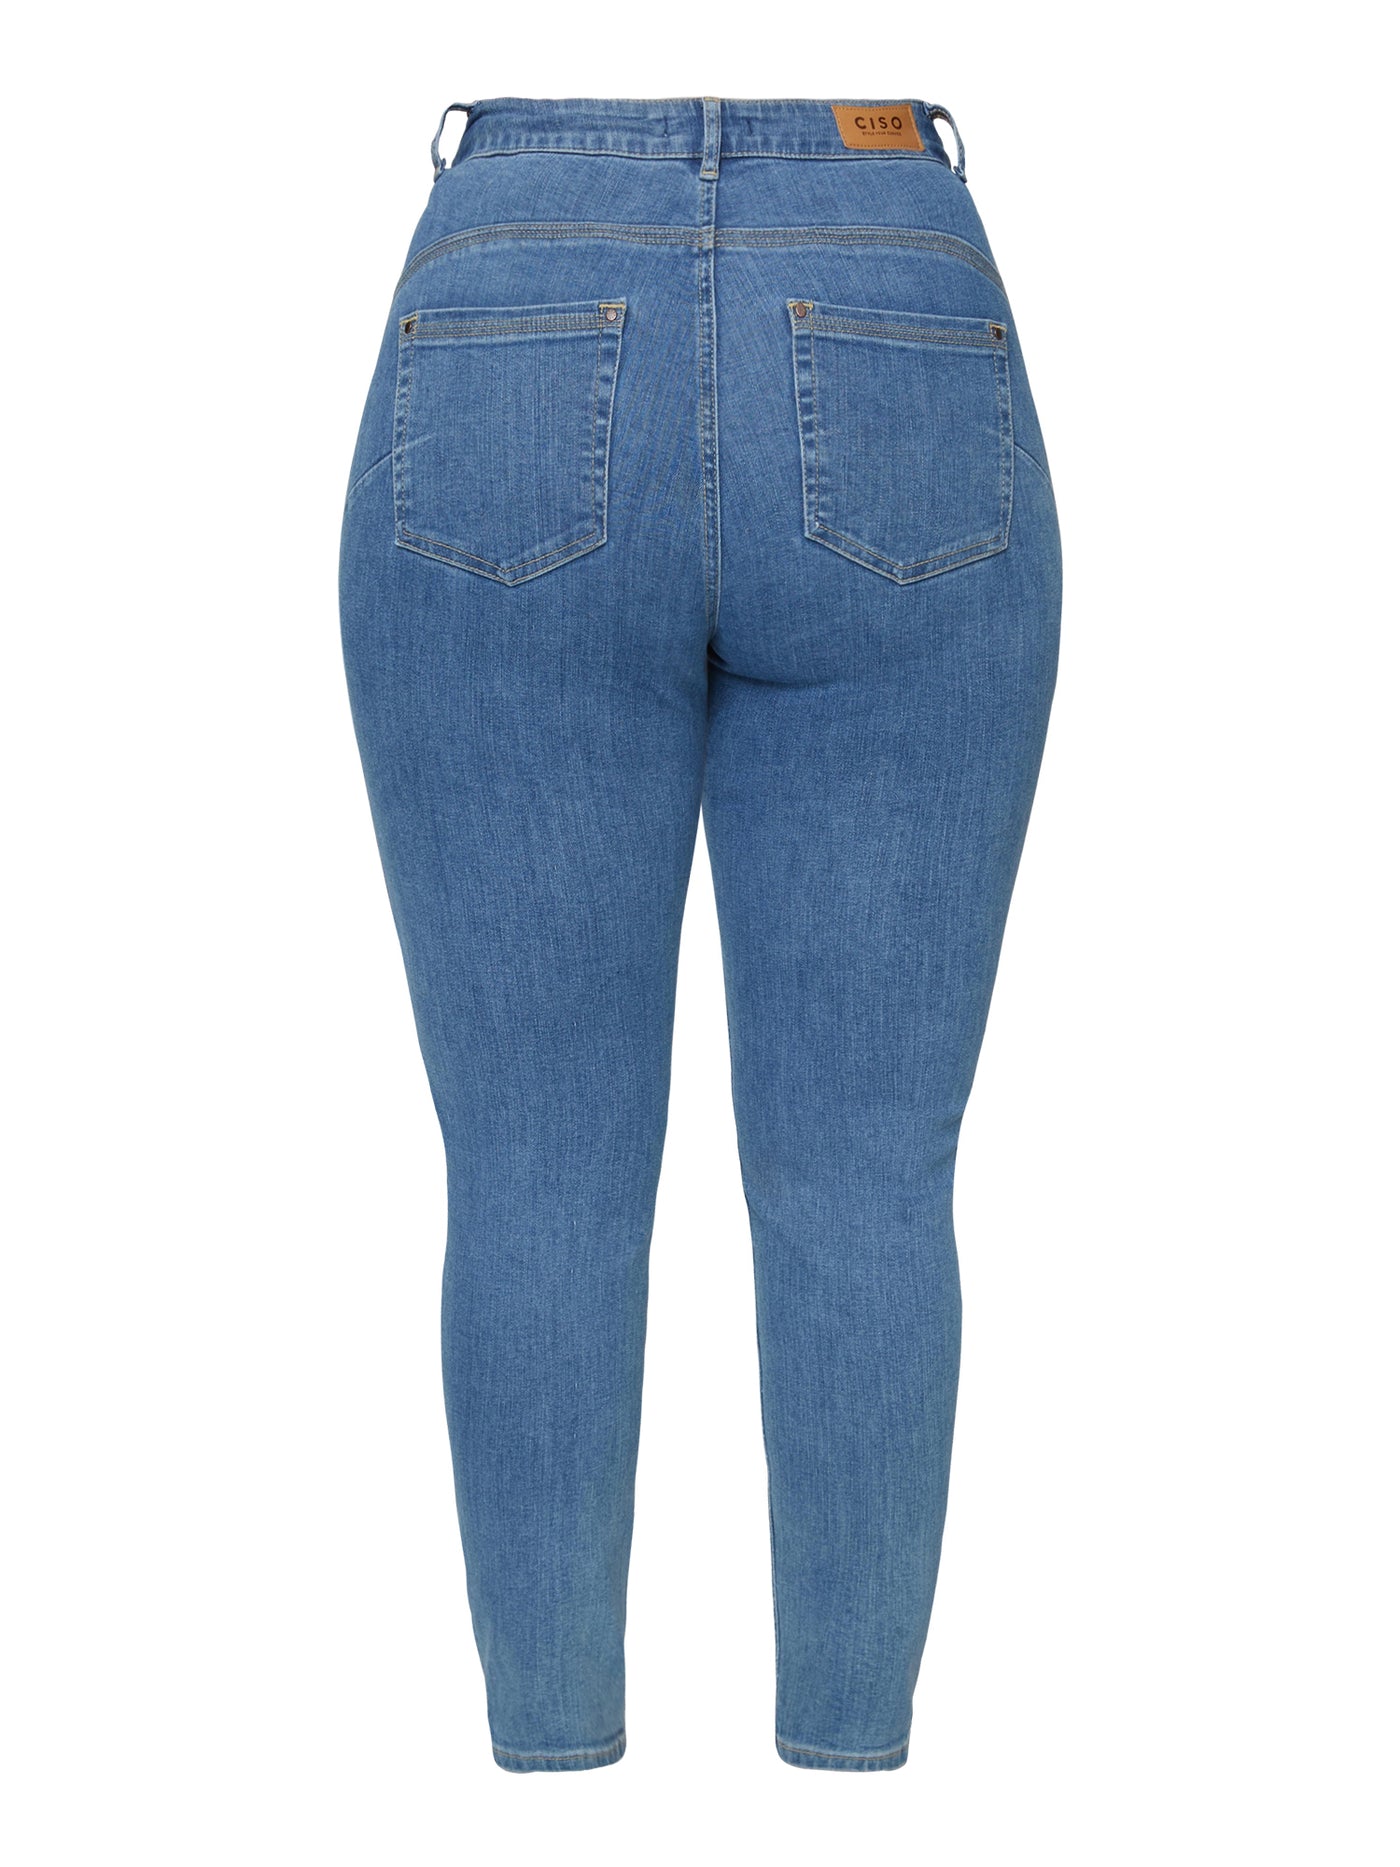 Jeans Selma Slim Leg - Bright Blue Denim